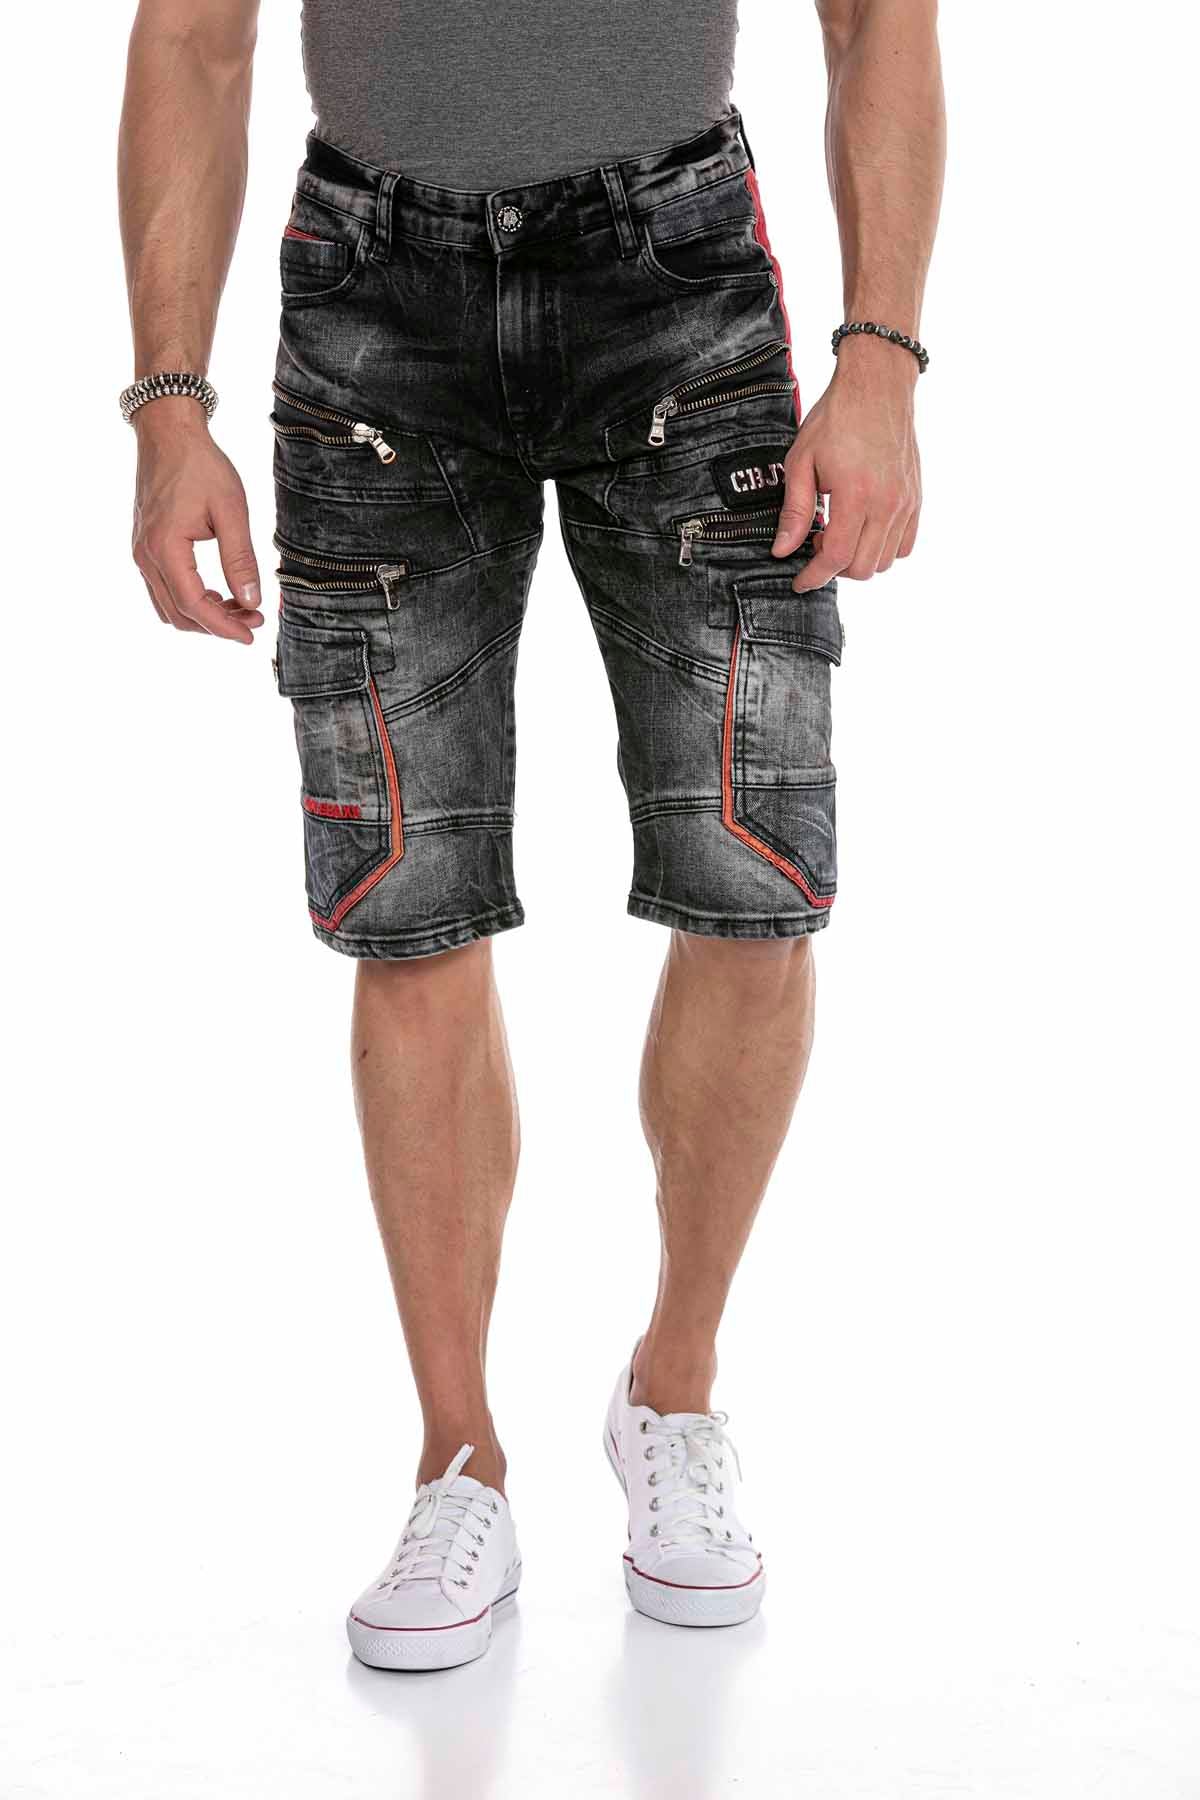 Cipo & Baxx ROSBURG Herren Kurze Jeans Denim CK224 – persvision